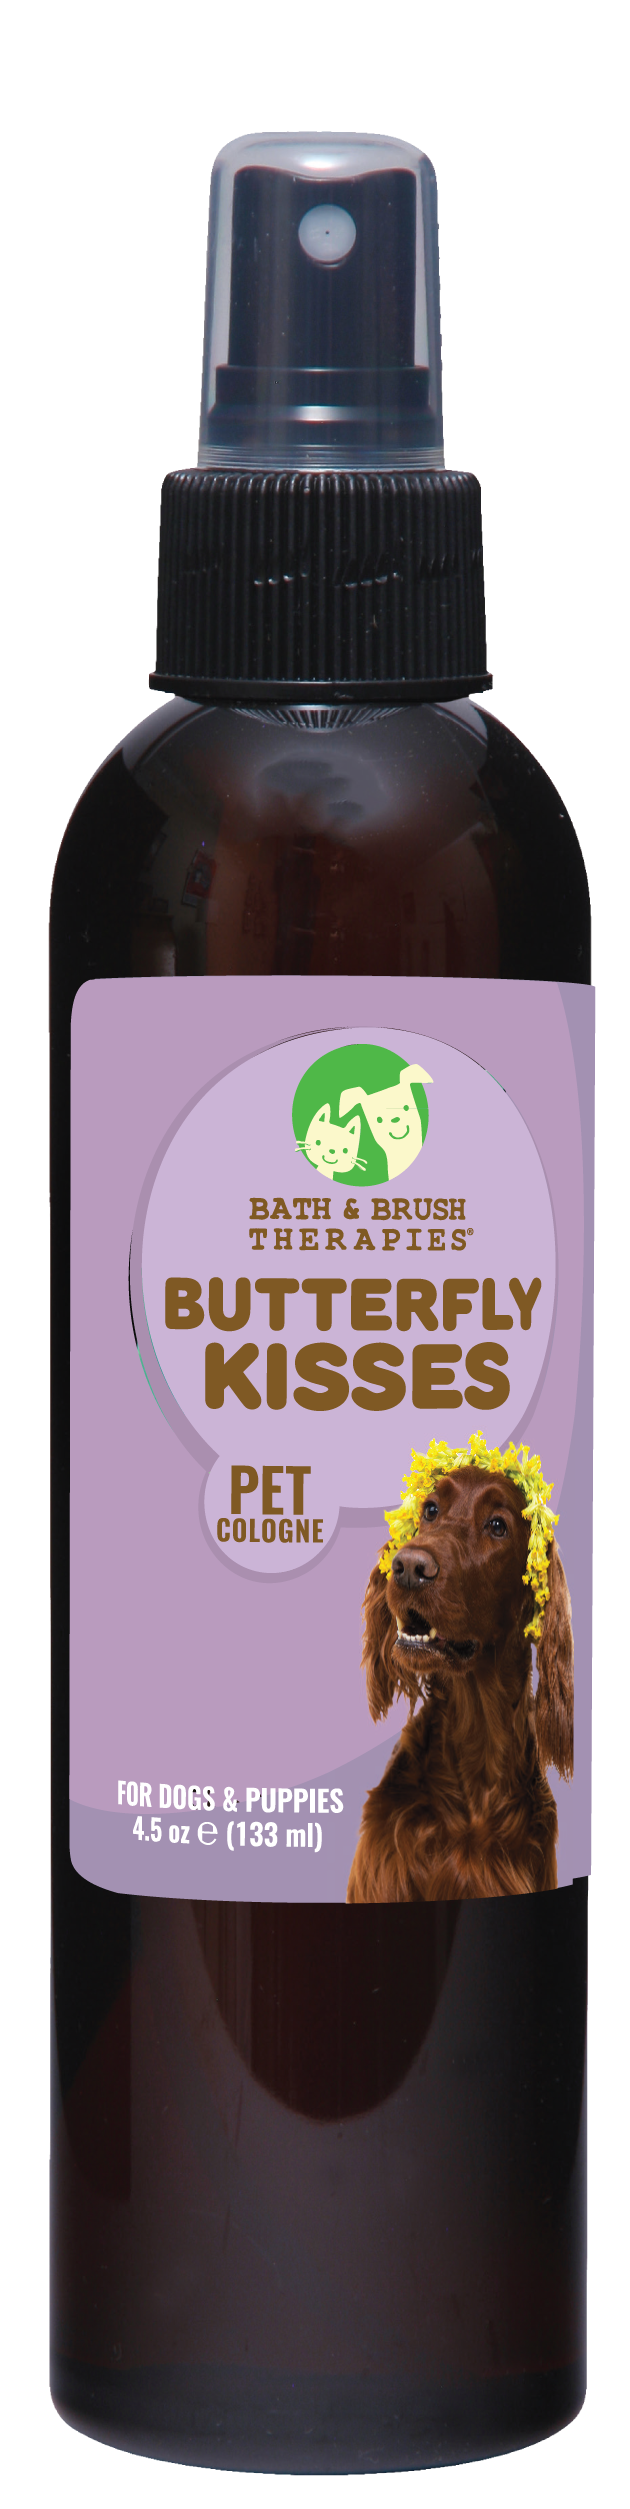 Butterfly Kisses Pet Cologne